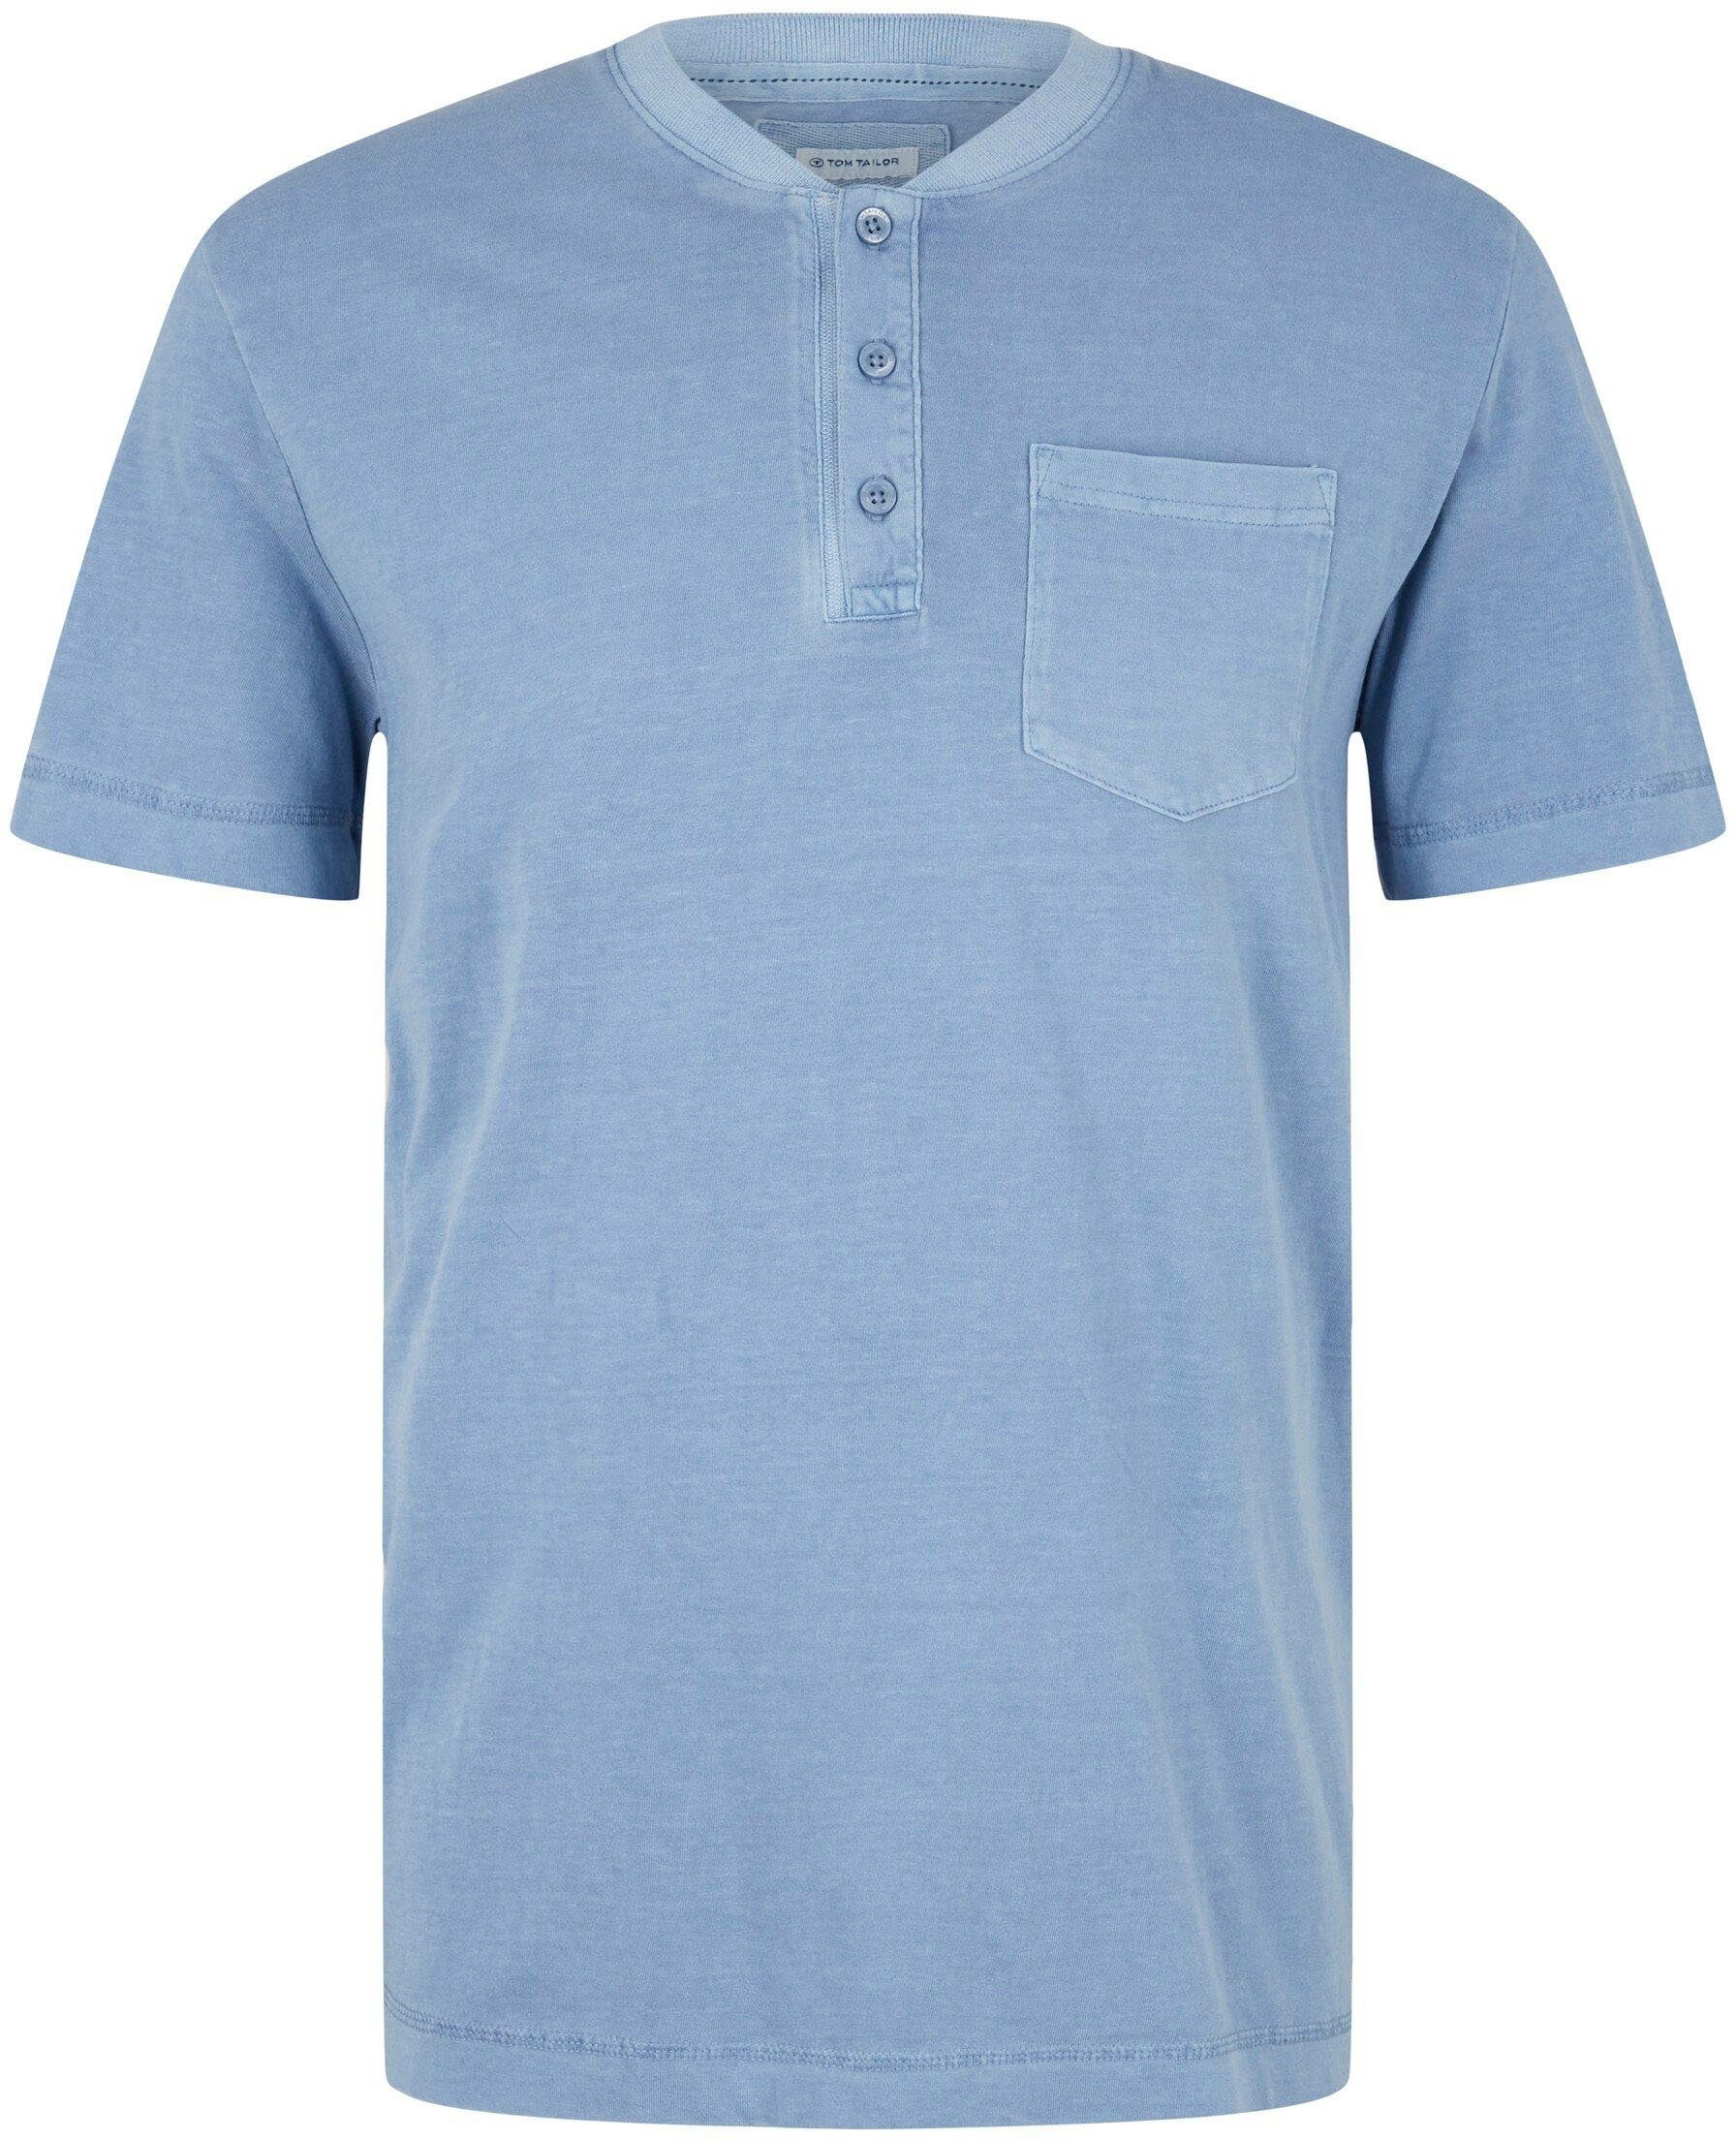 mid TOM T-Shirt blue greyish TAILOR